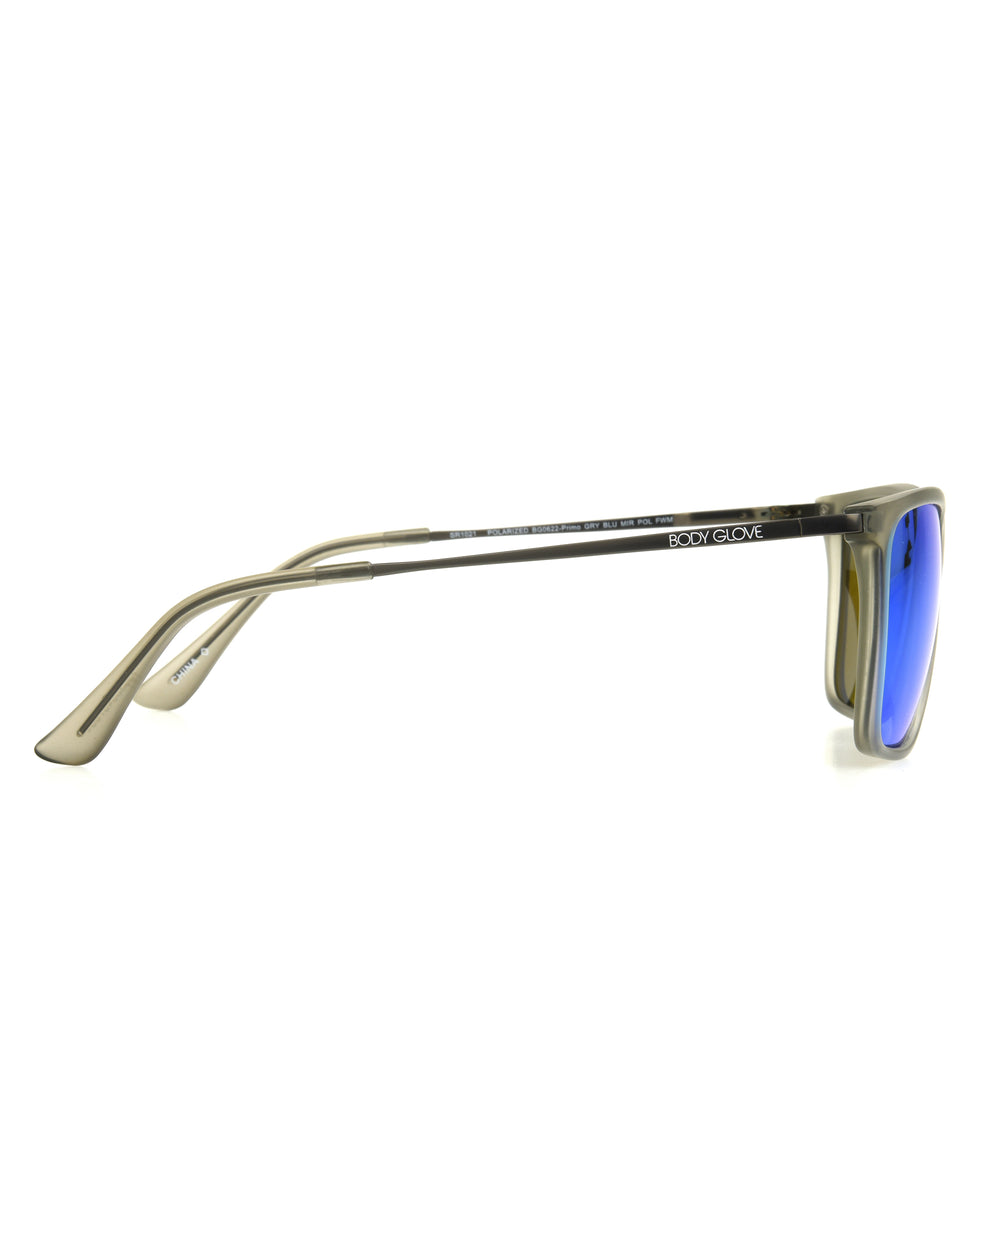 Primo Polarized Way-Style Sunglasses - Grey